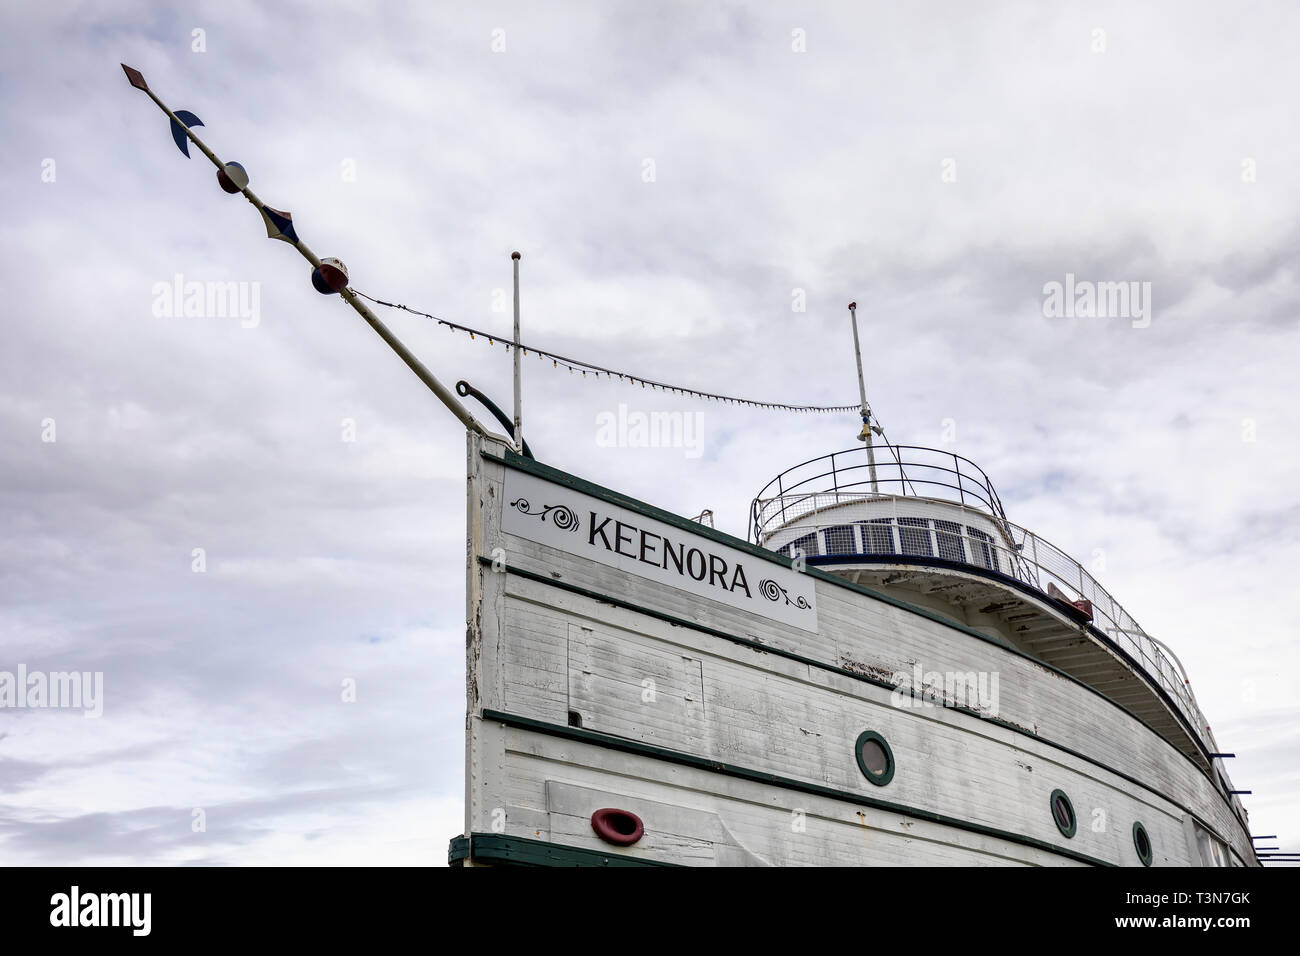 The SS Keenora steamship, Marine Museum of Manitoba, Selkirk, Manitoba, Canada. Stock Photo